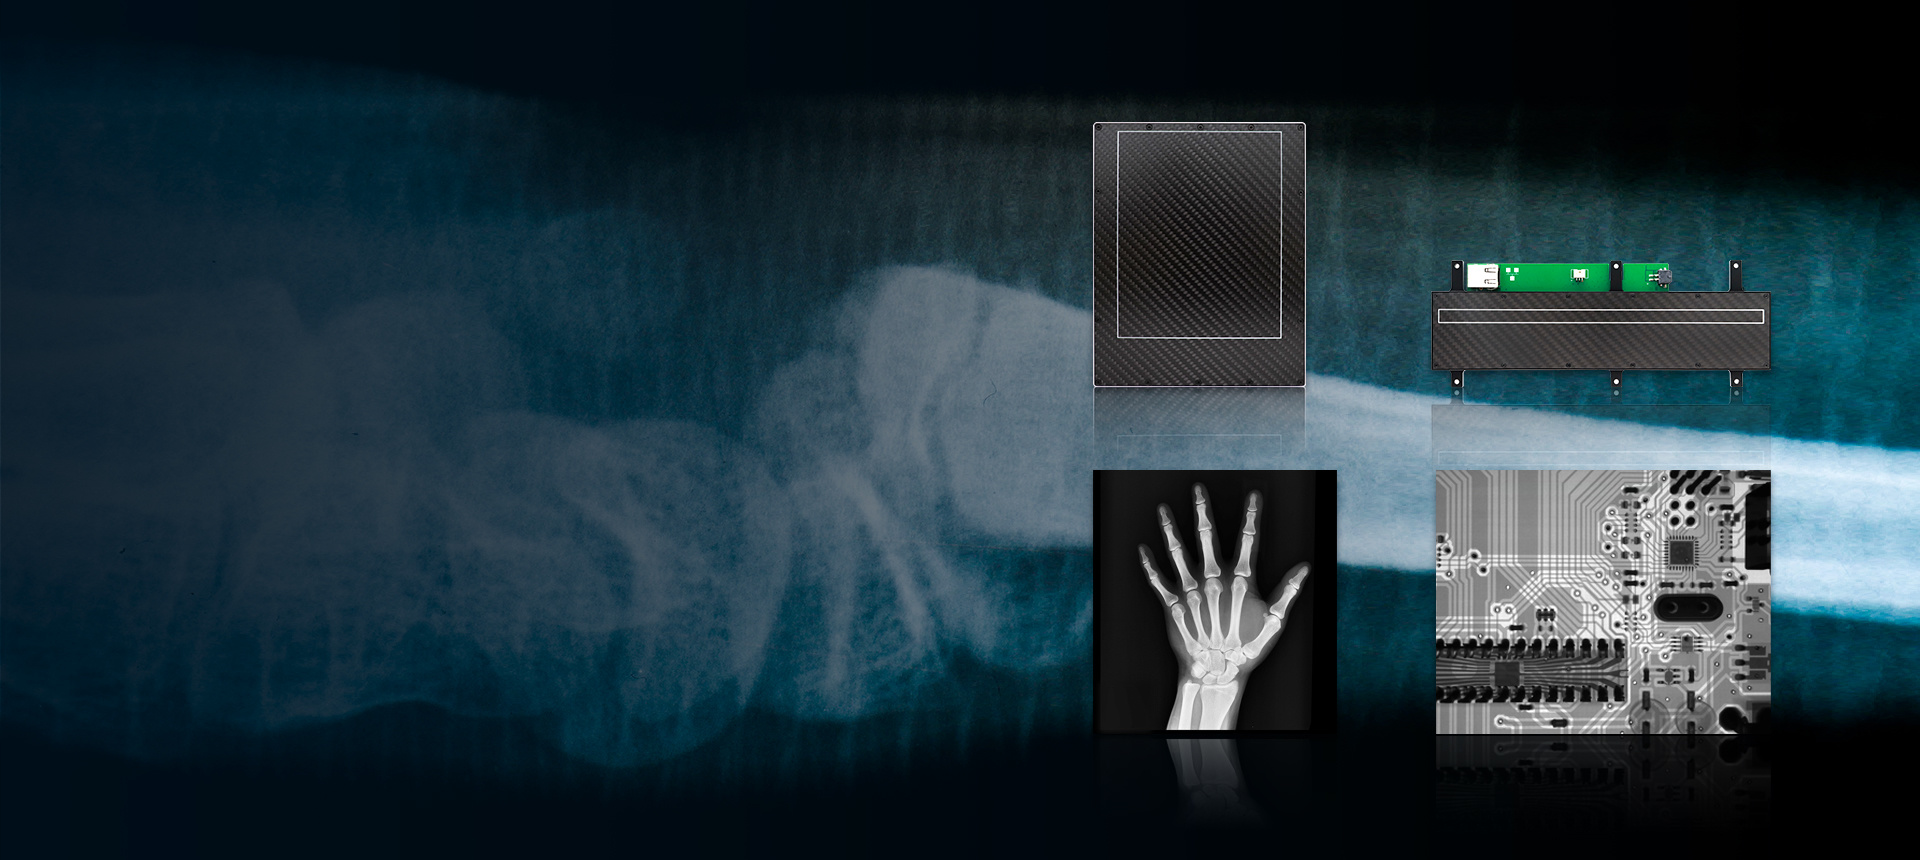 X射线图像探测器